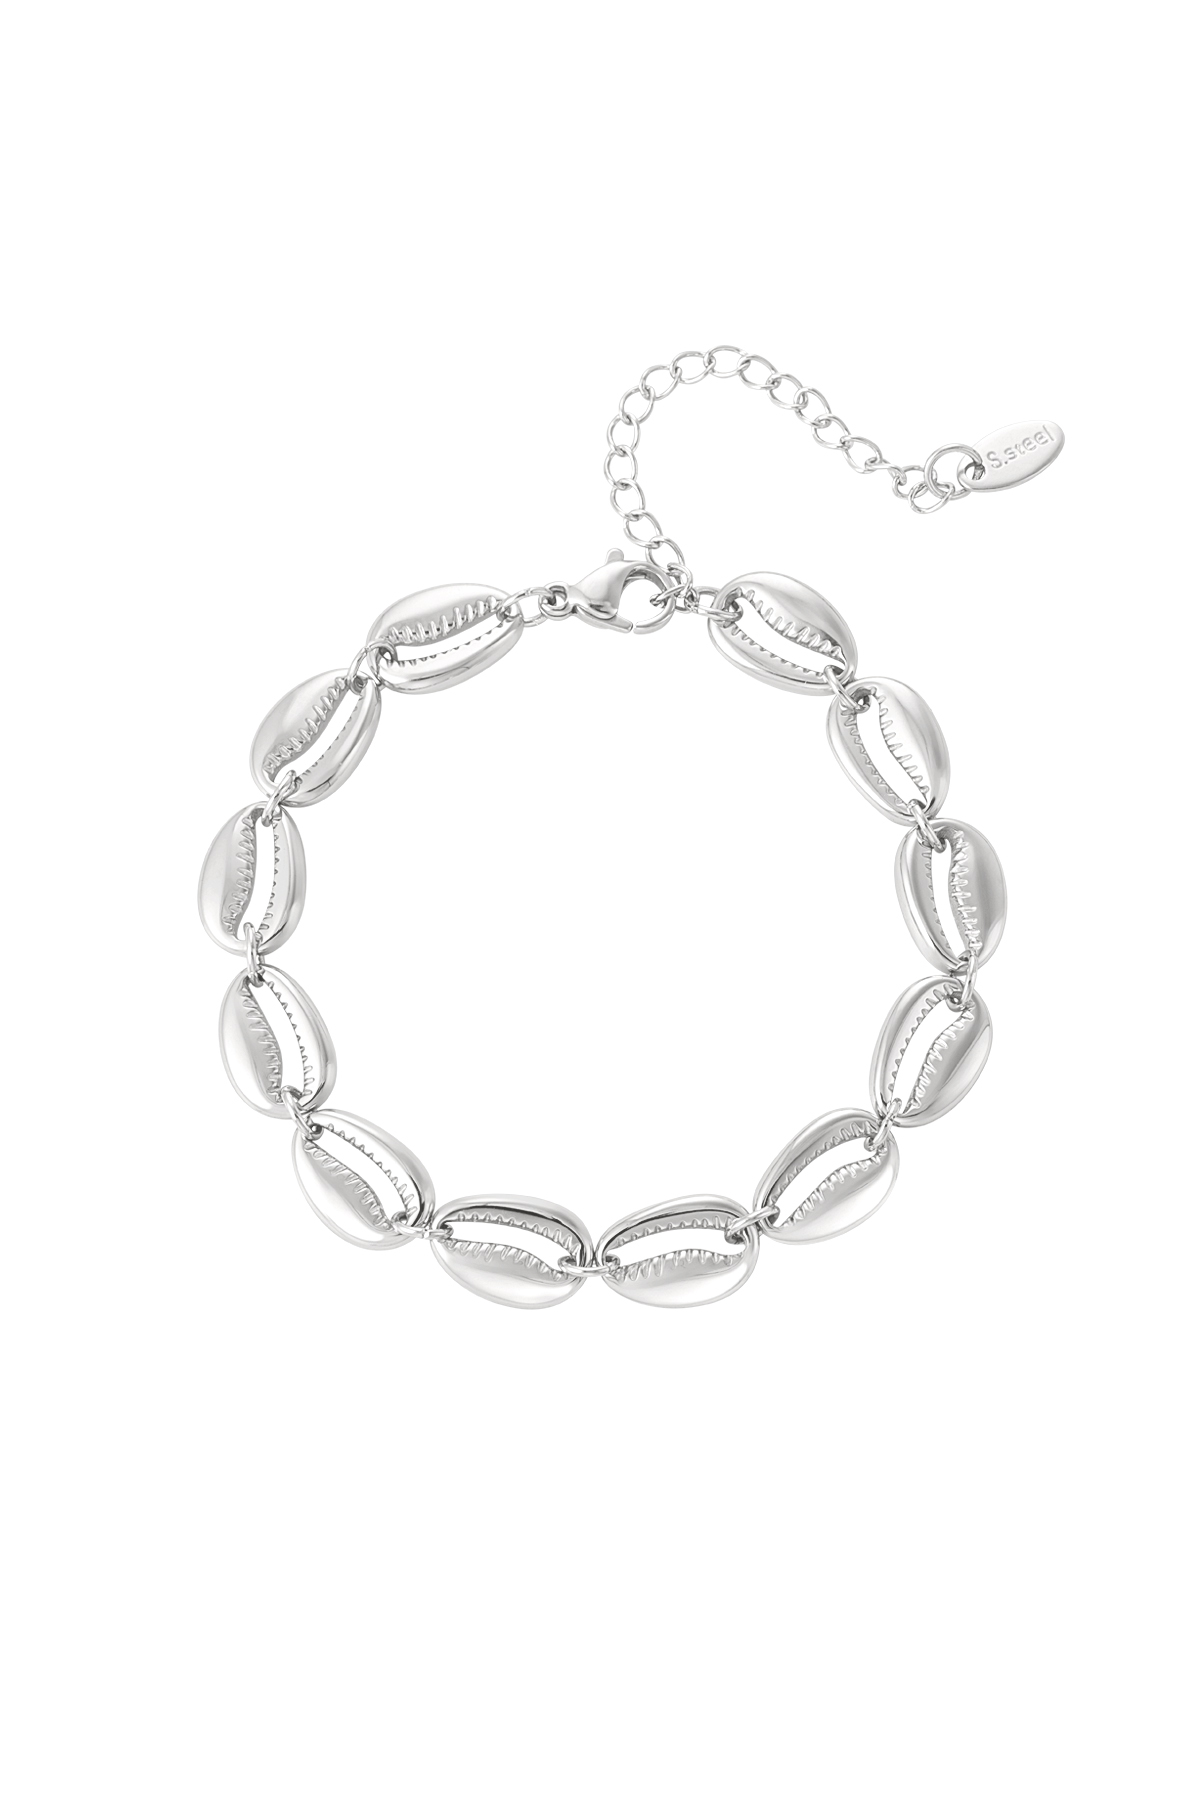 Shell bracelet - silver h5 